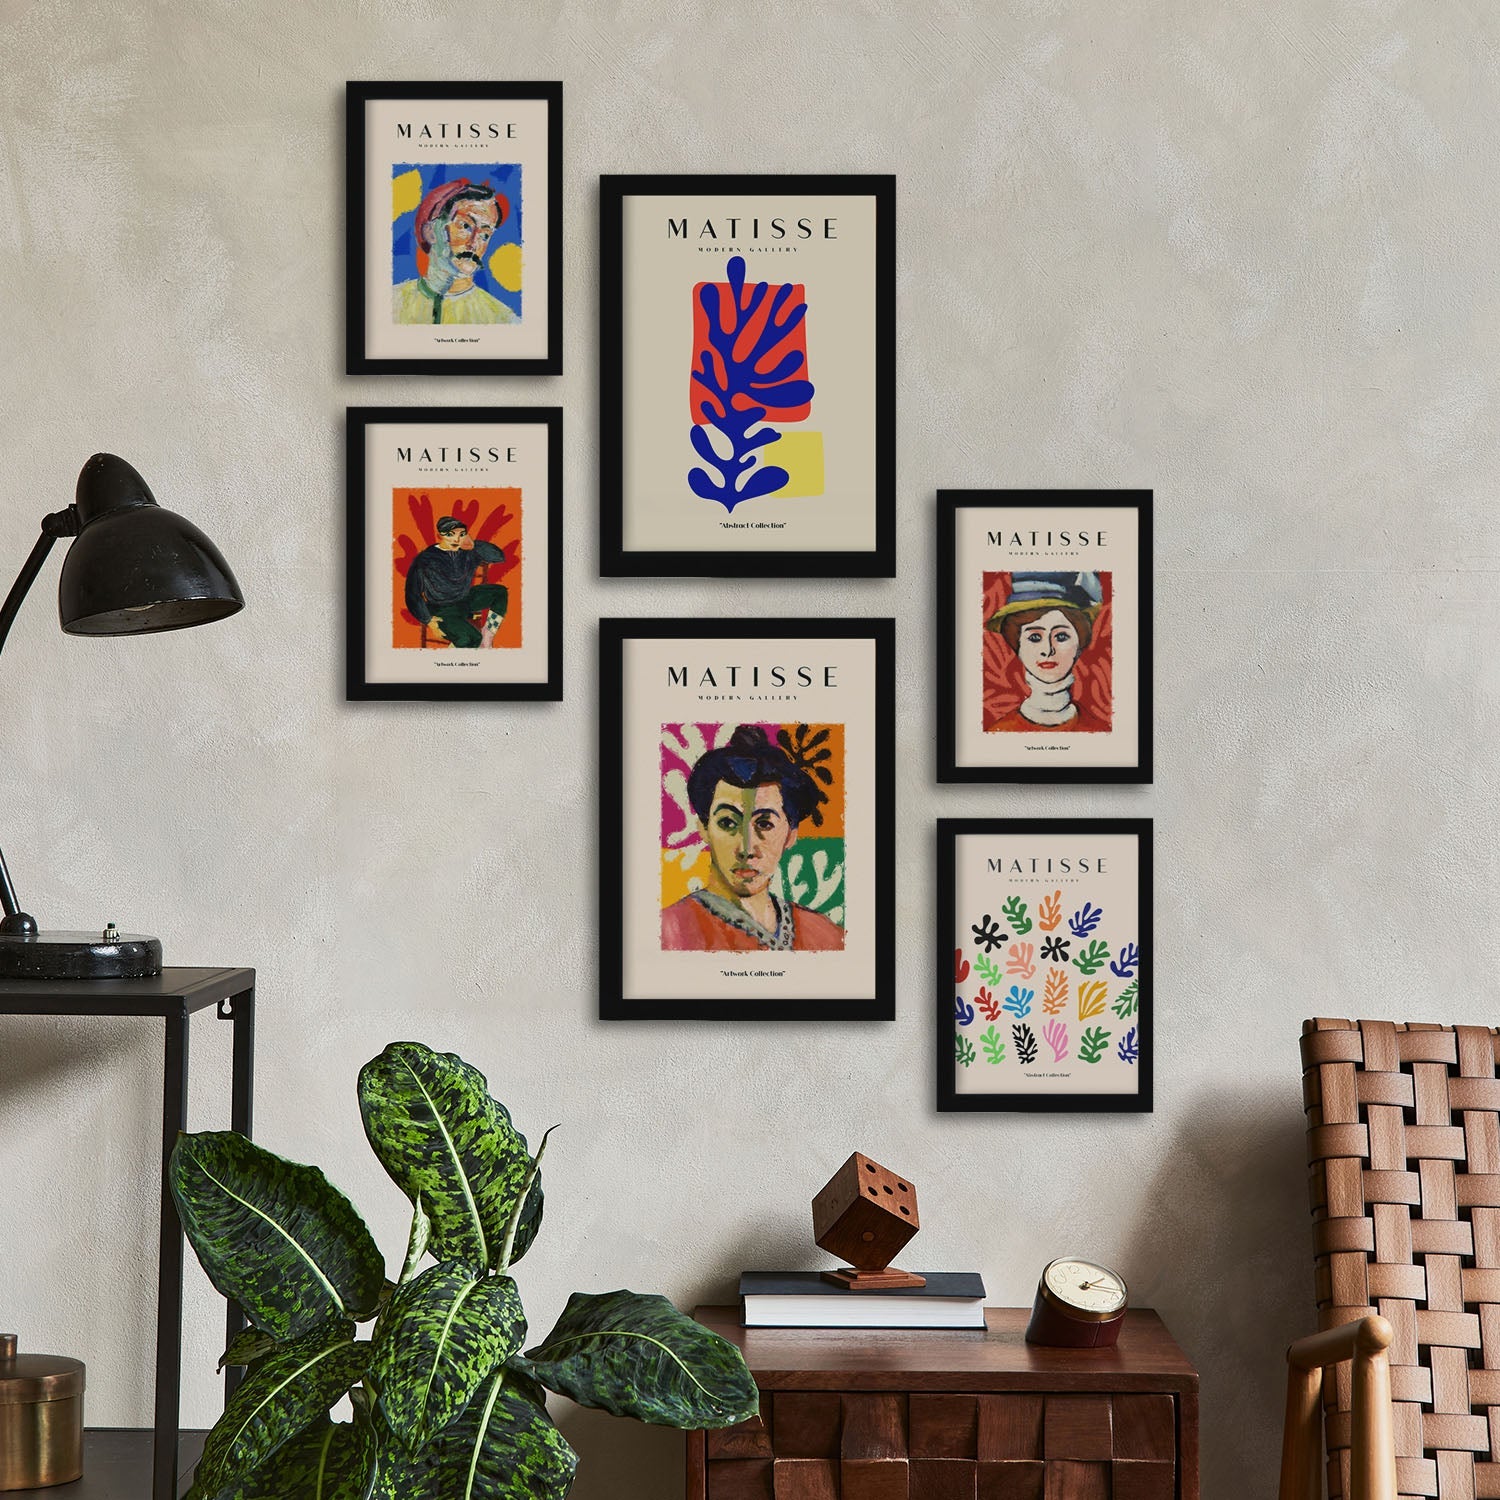 Henri Matisse Posters. Portraits. Abstract Fauvism Art Gallery-Artwork-Nacnic-Nacnic Estudio SL